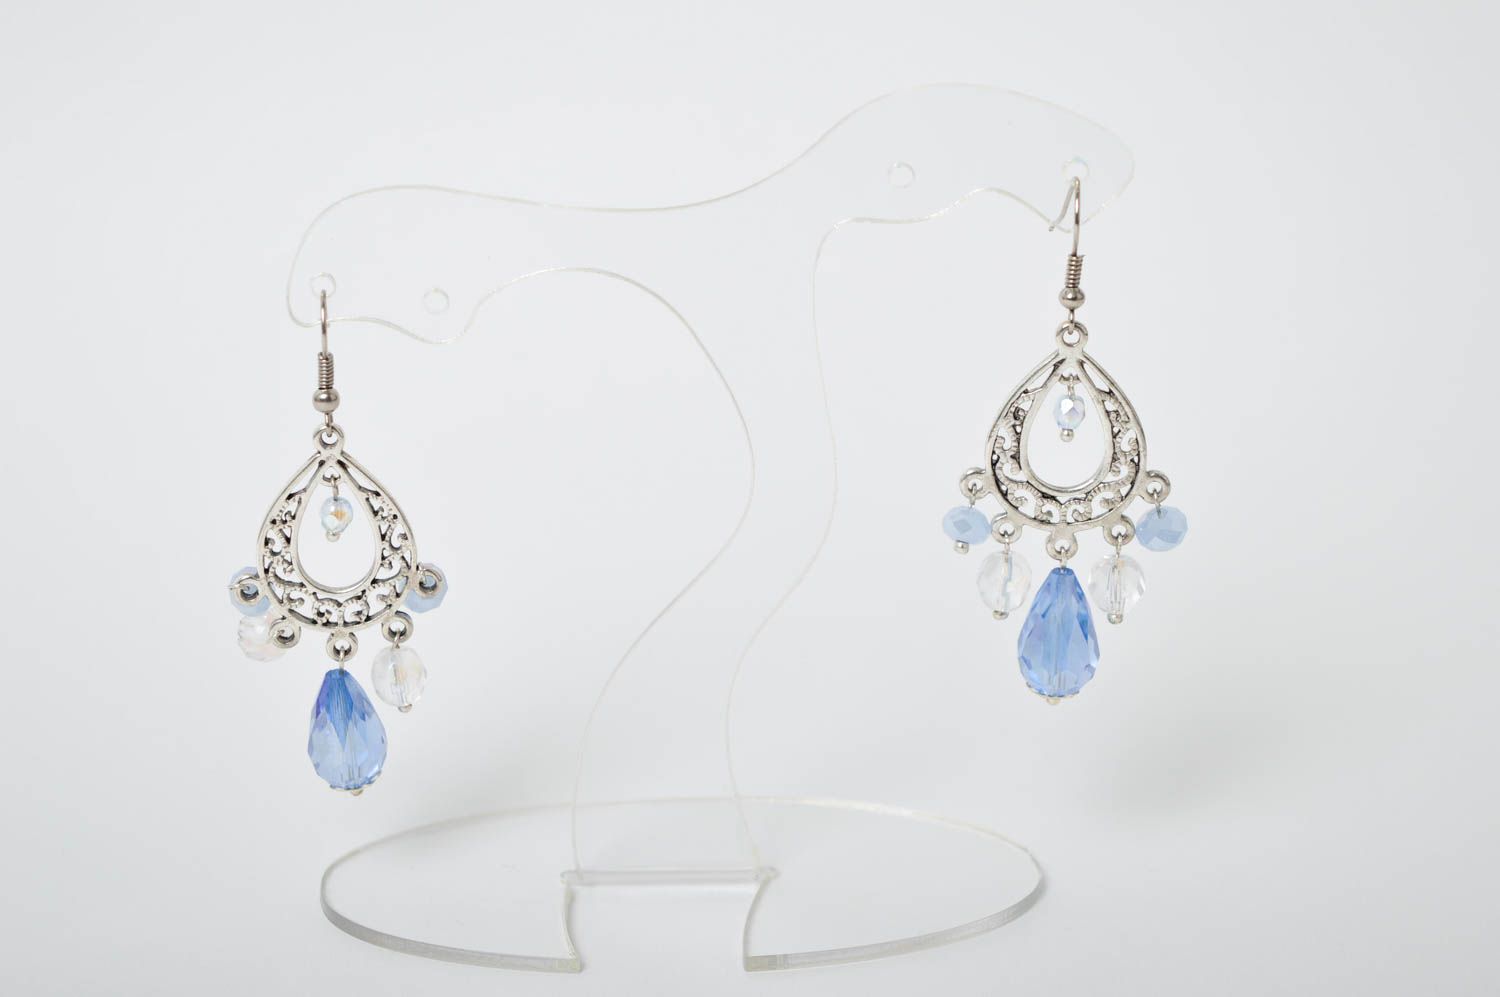 Beautiful handmade beaded earrings cool jewelry designs fashion trends photo 2